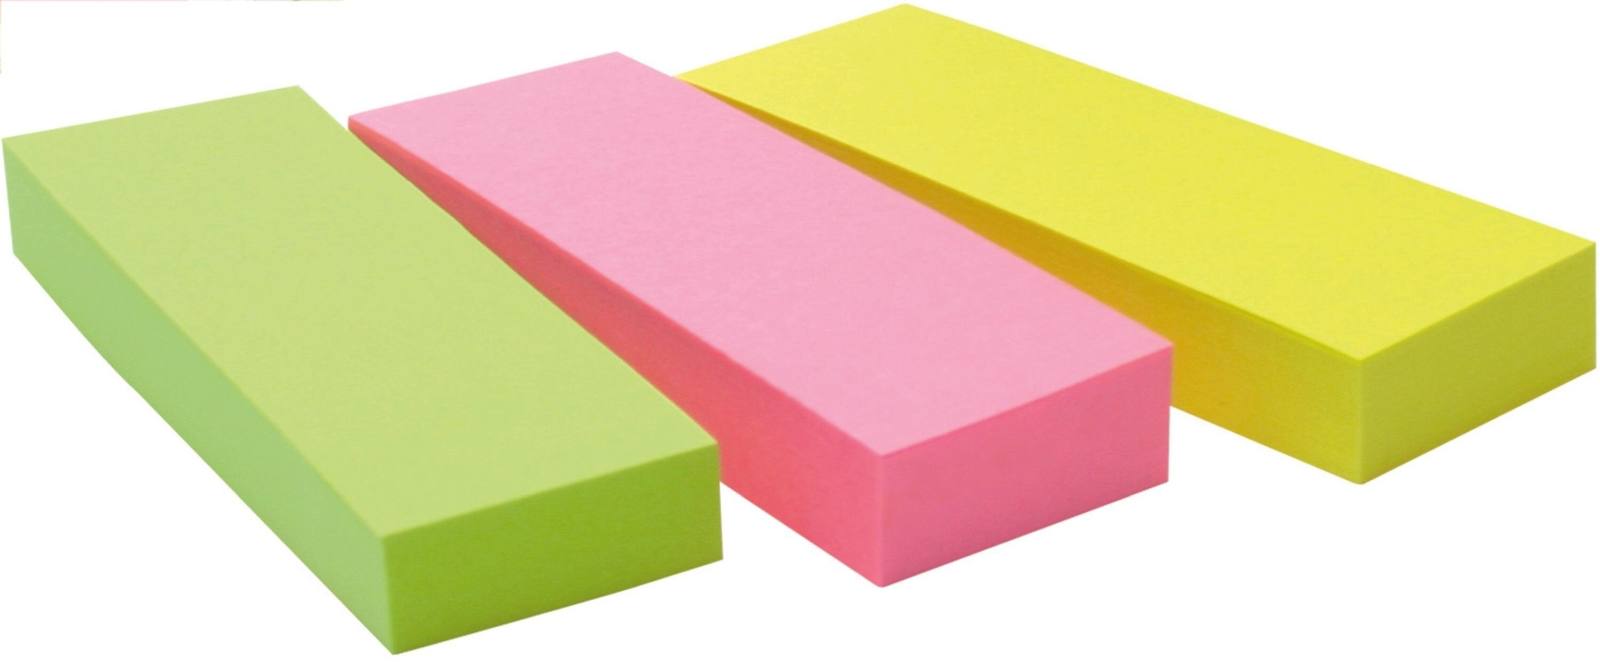 3M Post-it Page Marker 671-3, 3 x 100 Blatt, breite Blocks, neongrün, -pink, -gelb, 25 mm x 76 mm